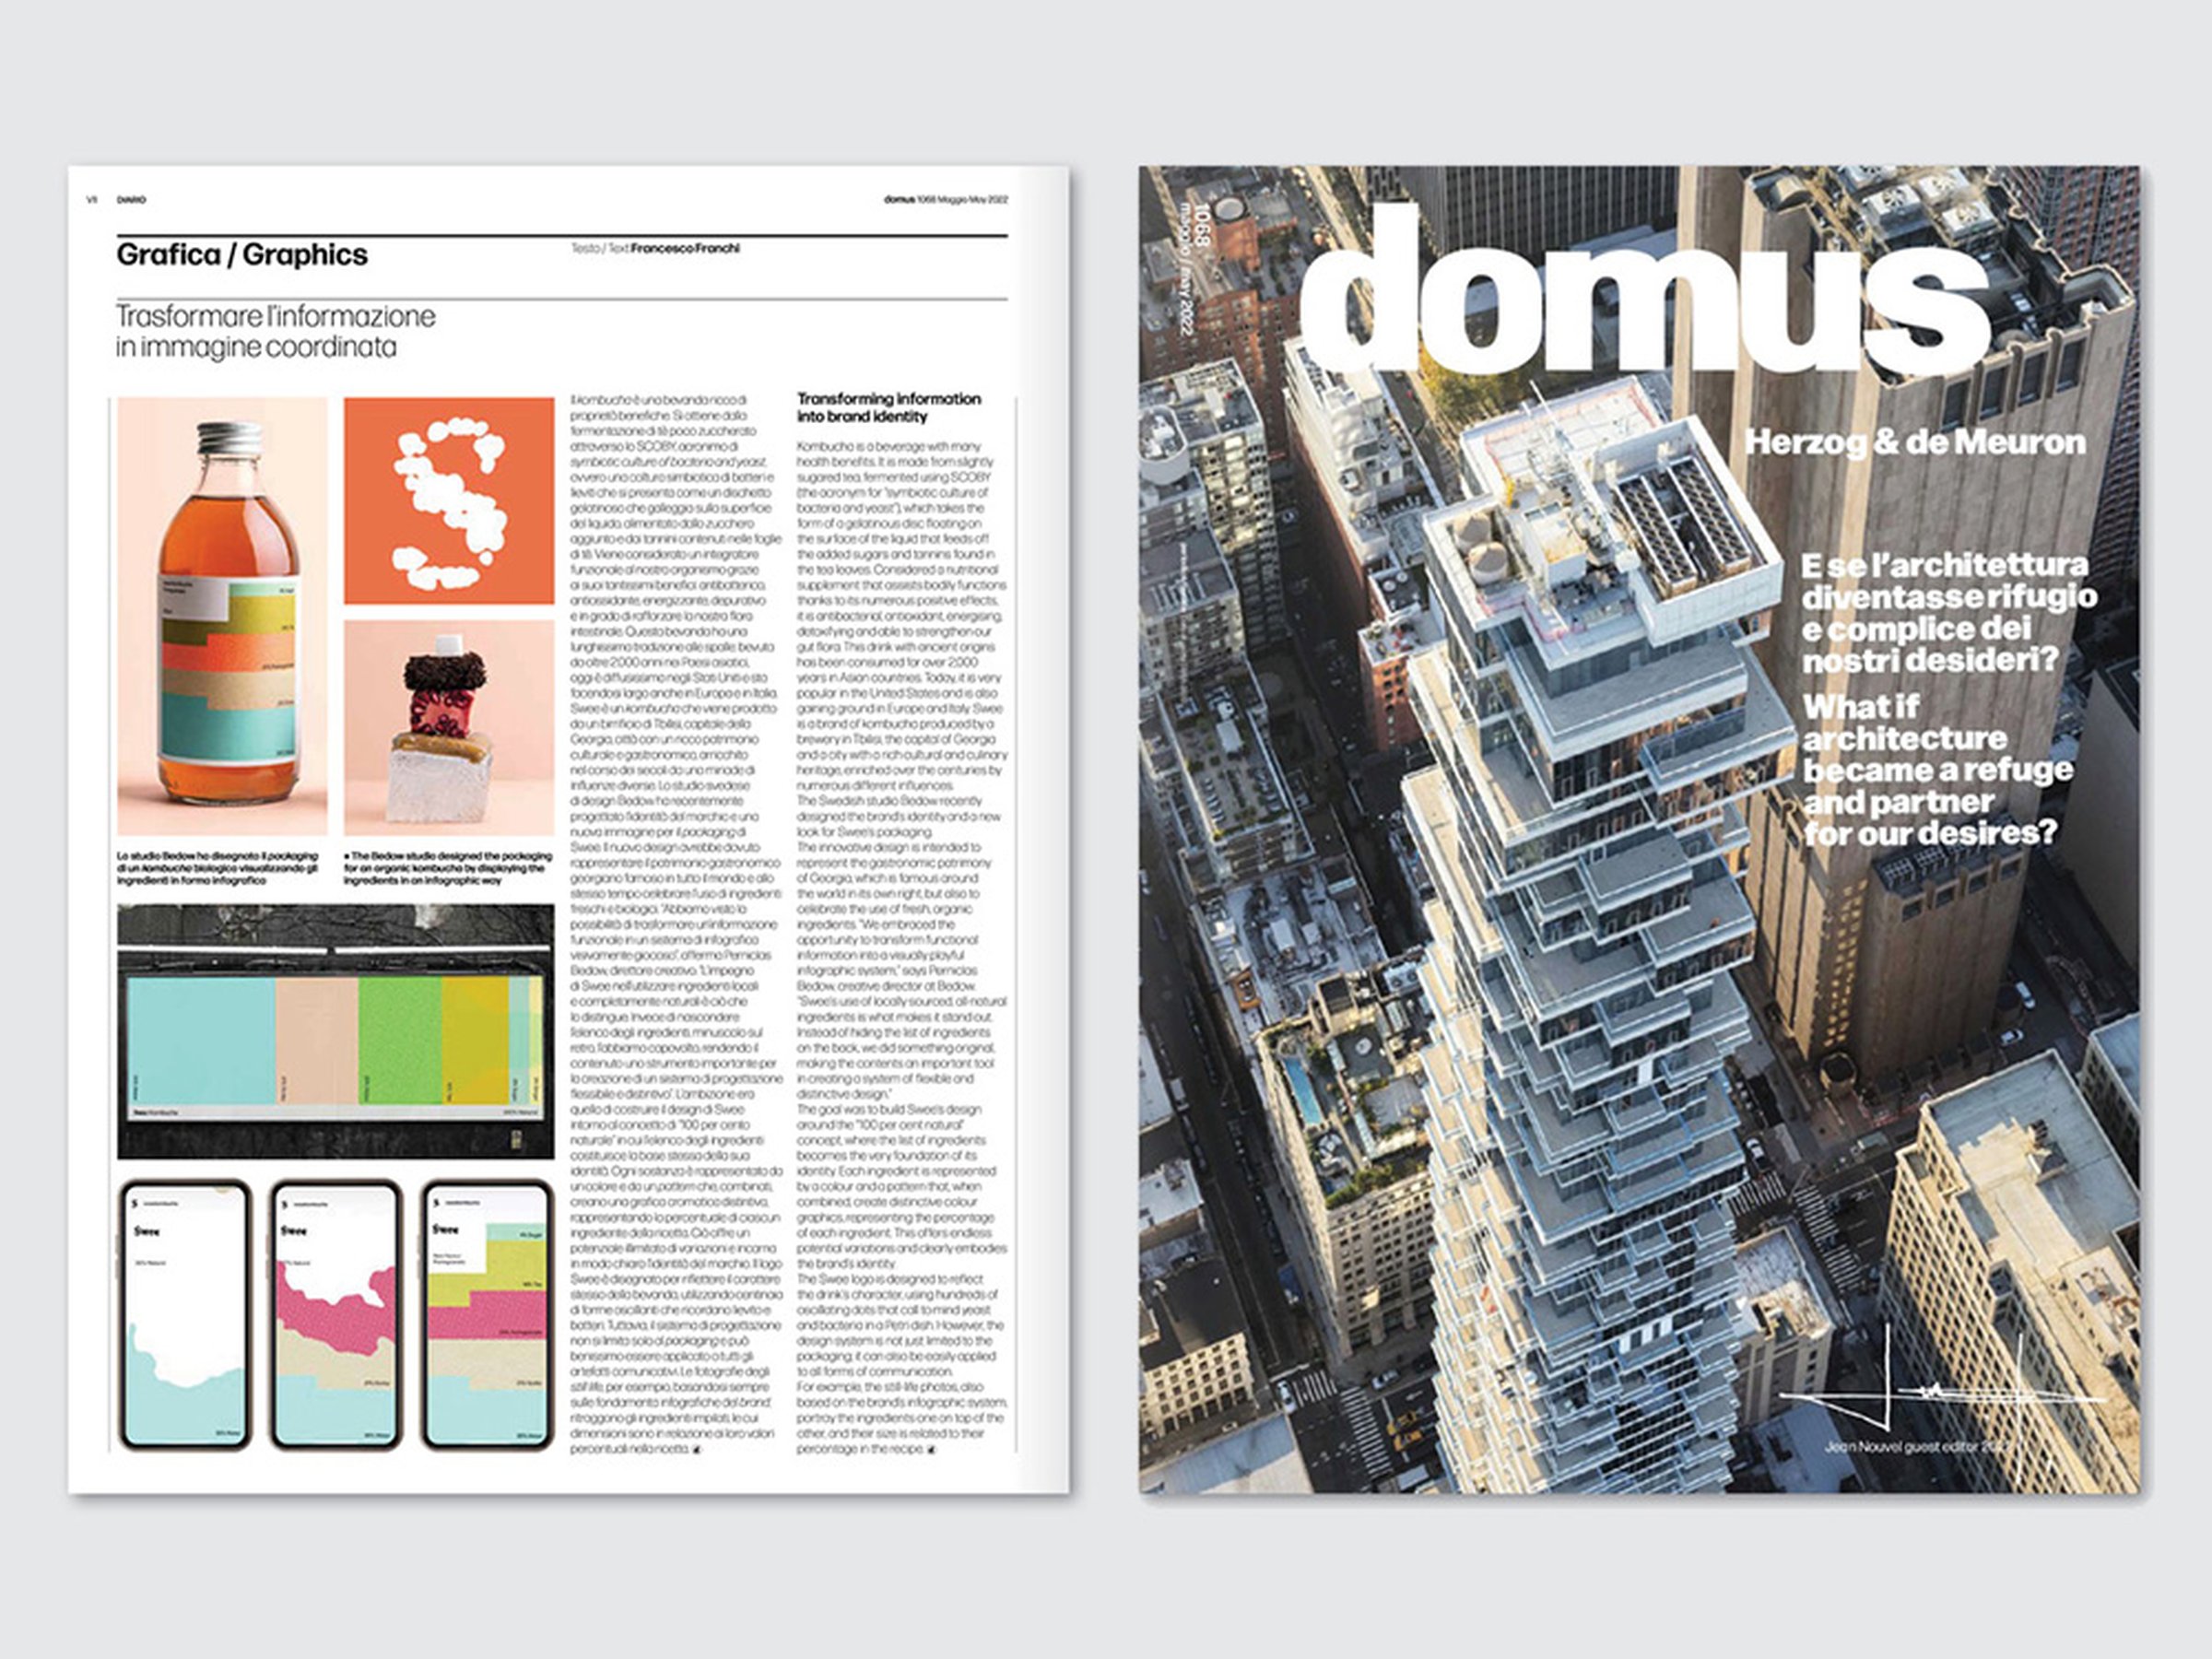 Italian architecture and design magazine Domus writes about Swee Kombucha